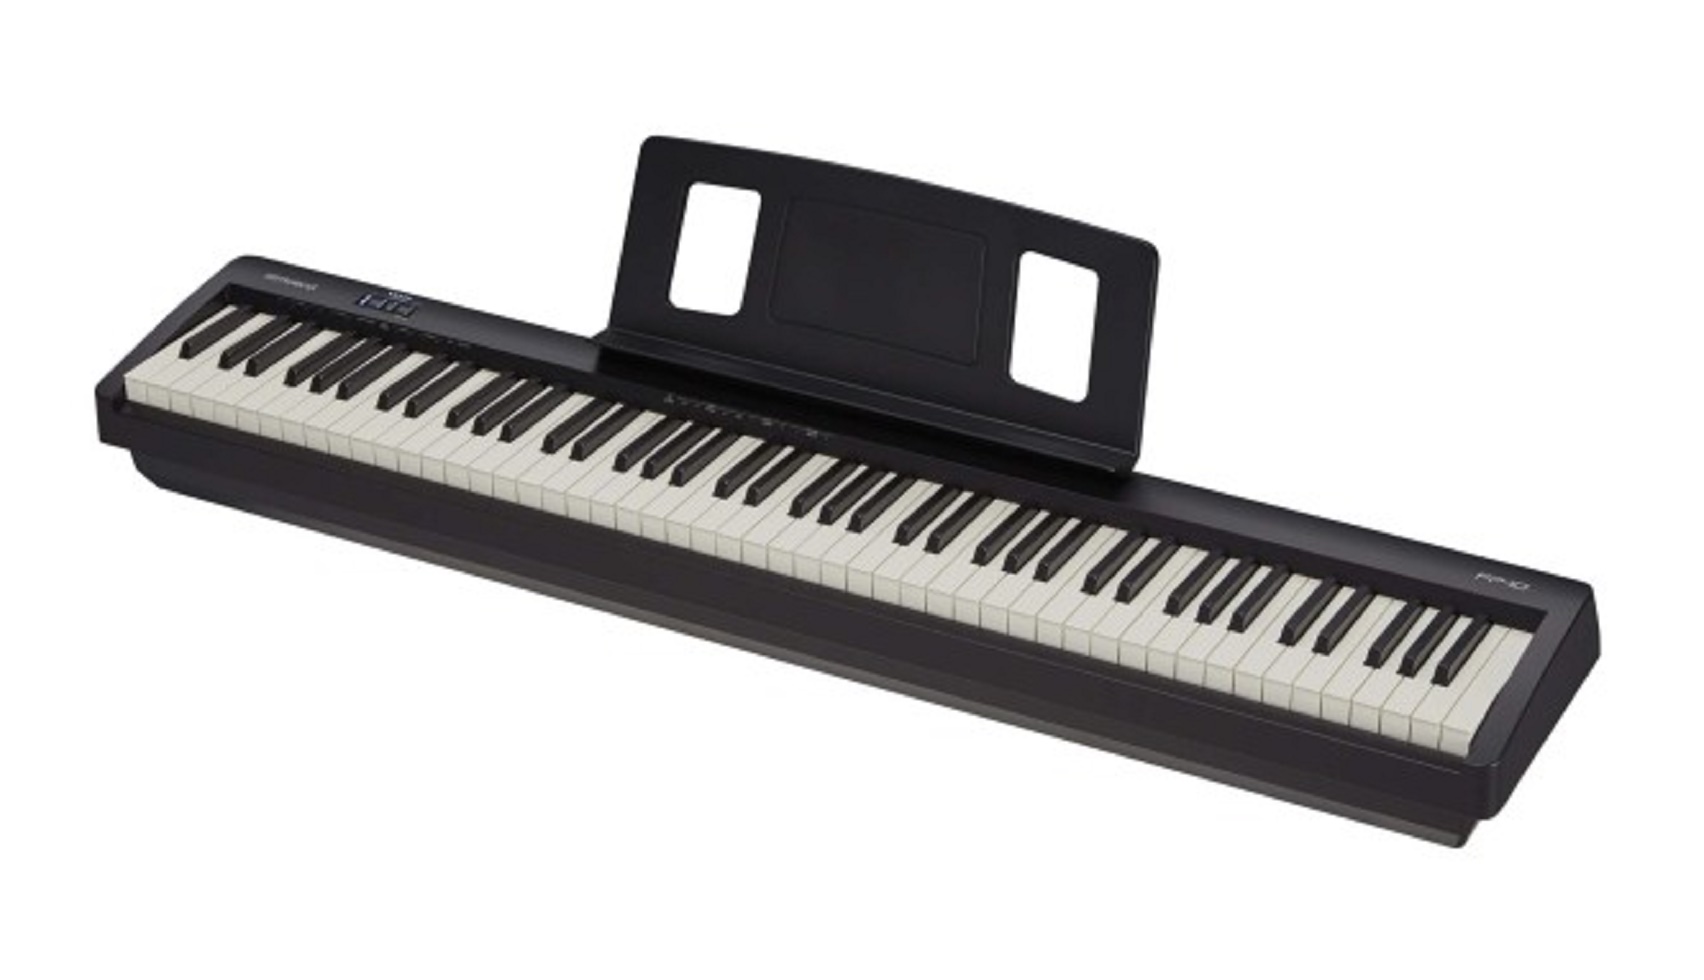 ROLAND FP-10-BK - Цифровое фортепиано